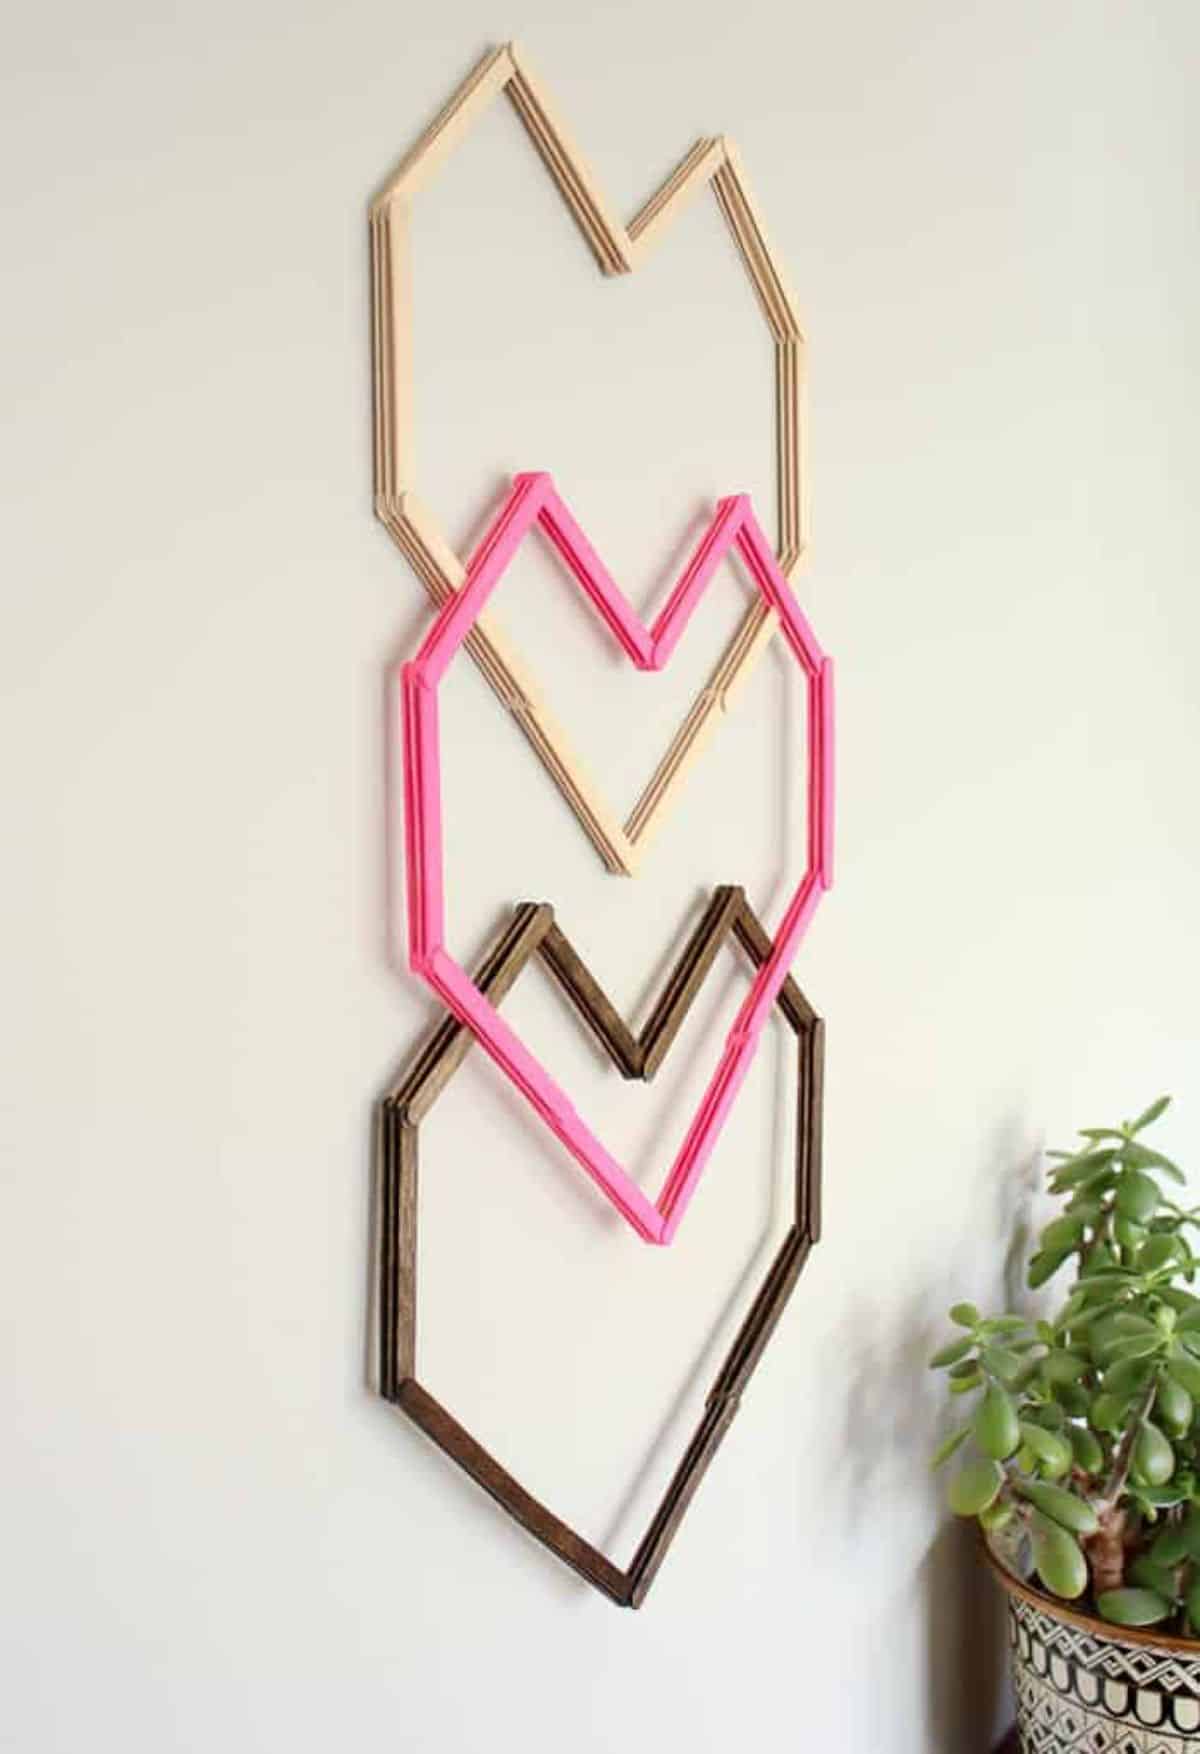 Geometric Heart DIY Wall Art with Popsicle Sticks!